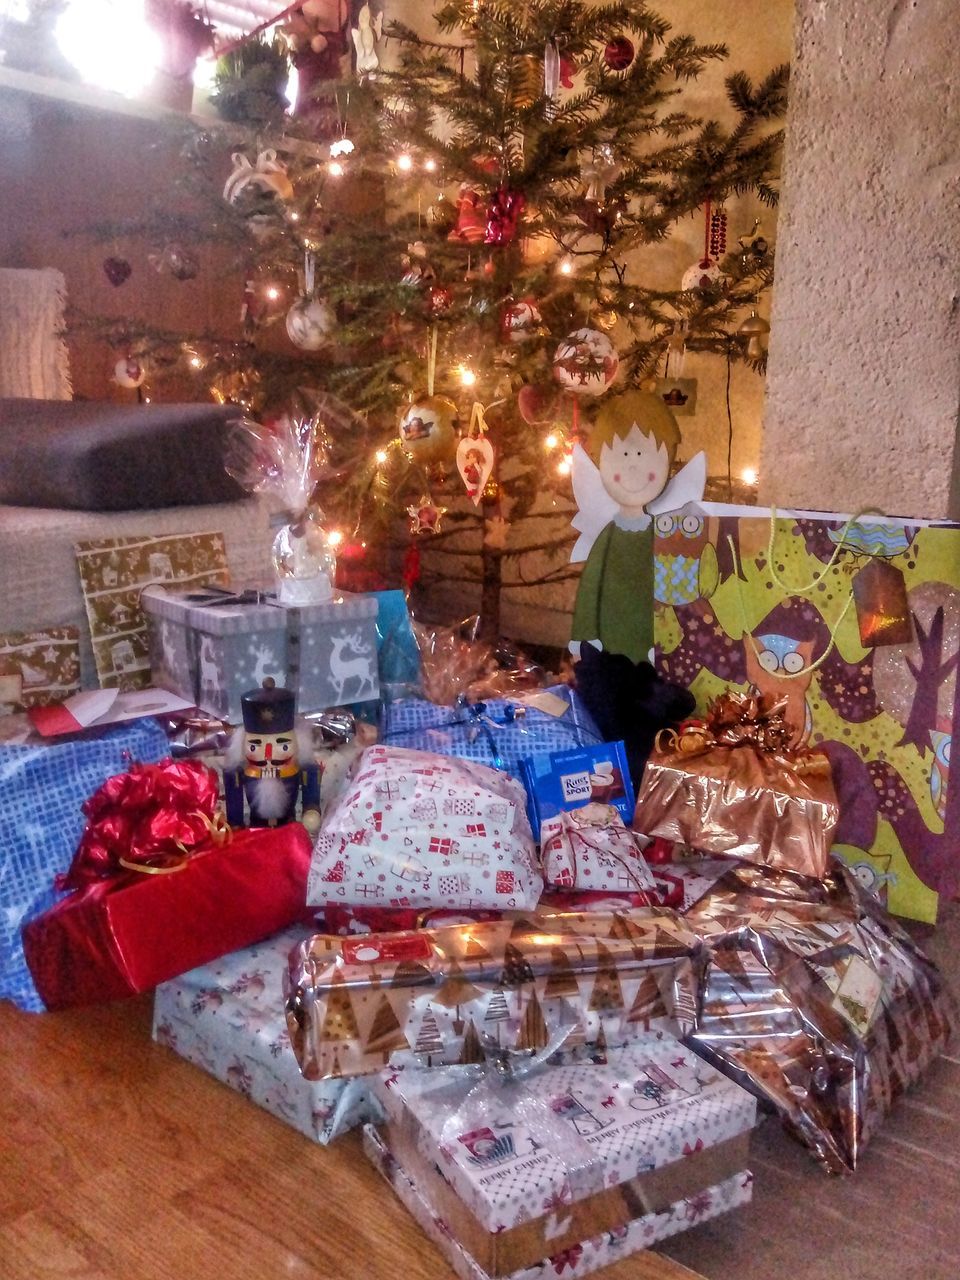 ILLUMINATED CHRISTMAS TREE AT HOME